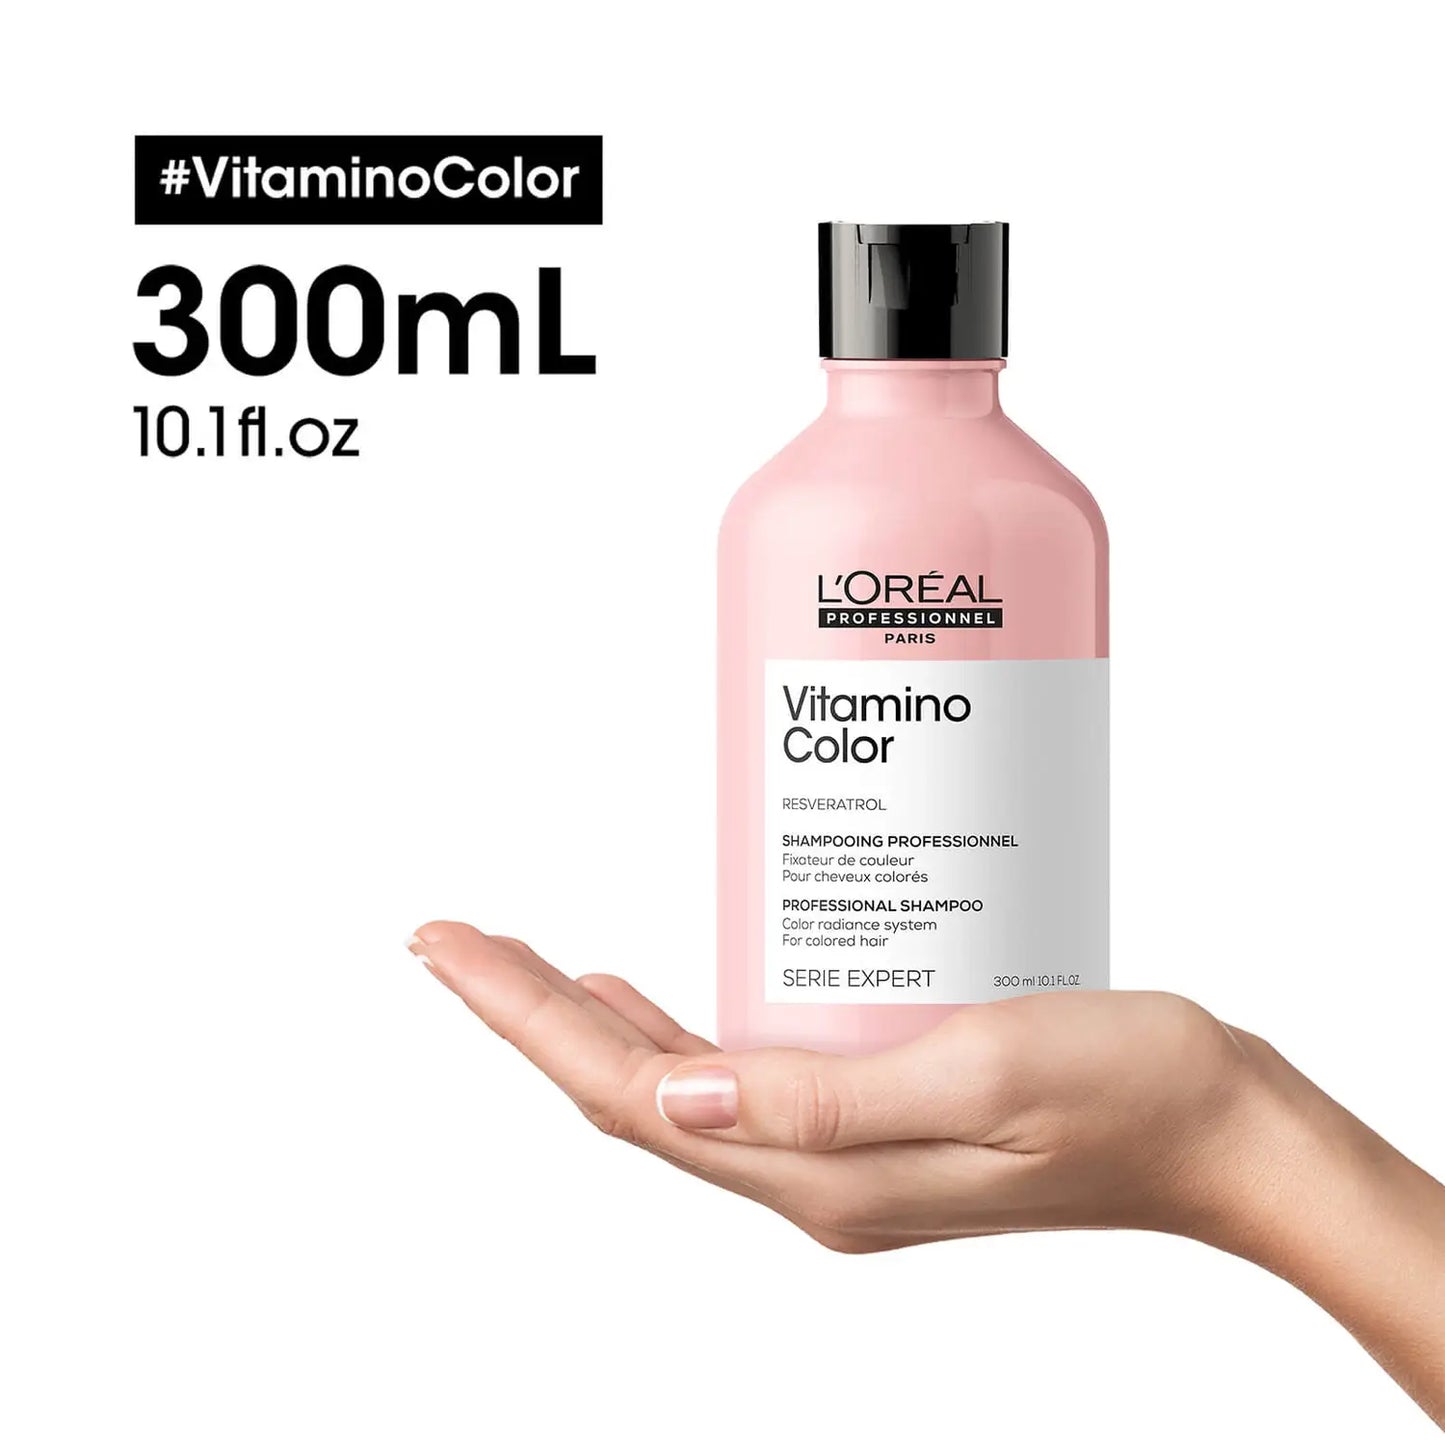 L’Oréal Professionnel Vitamino Color Shampoo & Hair Mask Duo